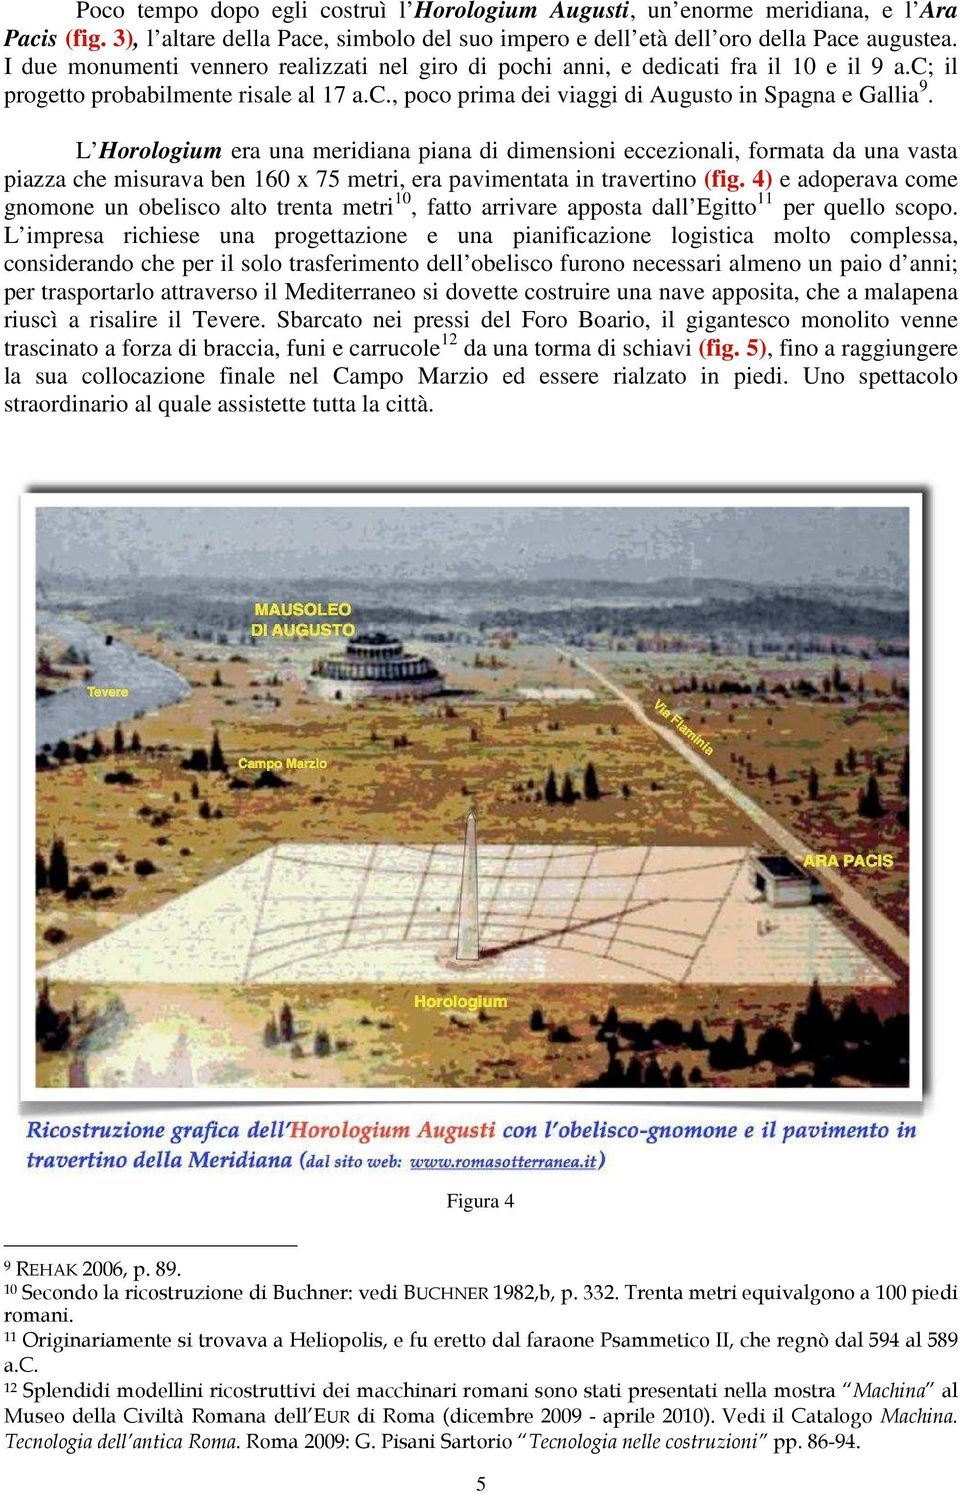 L Horologium era una meridiana piana di dimensioni eccezionali, formata da una vasta piazza che misurava ben 160 x 75 metri, era pavimentata in travertino (fig.